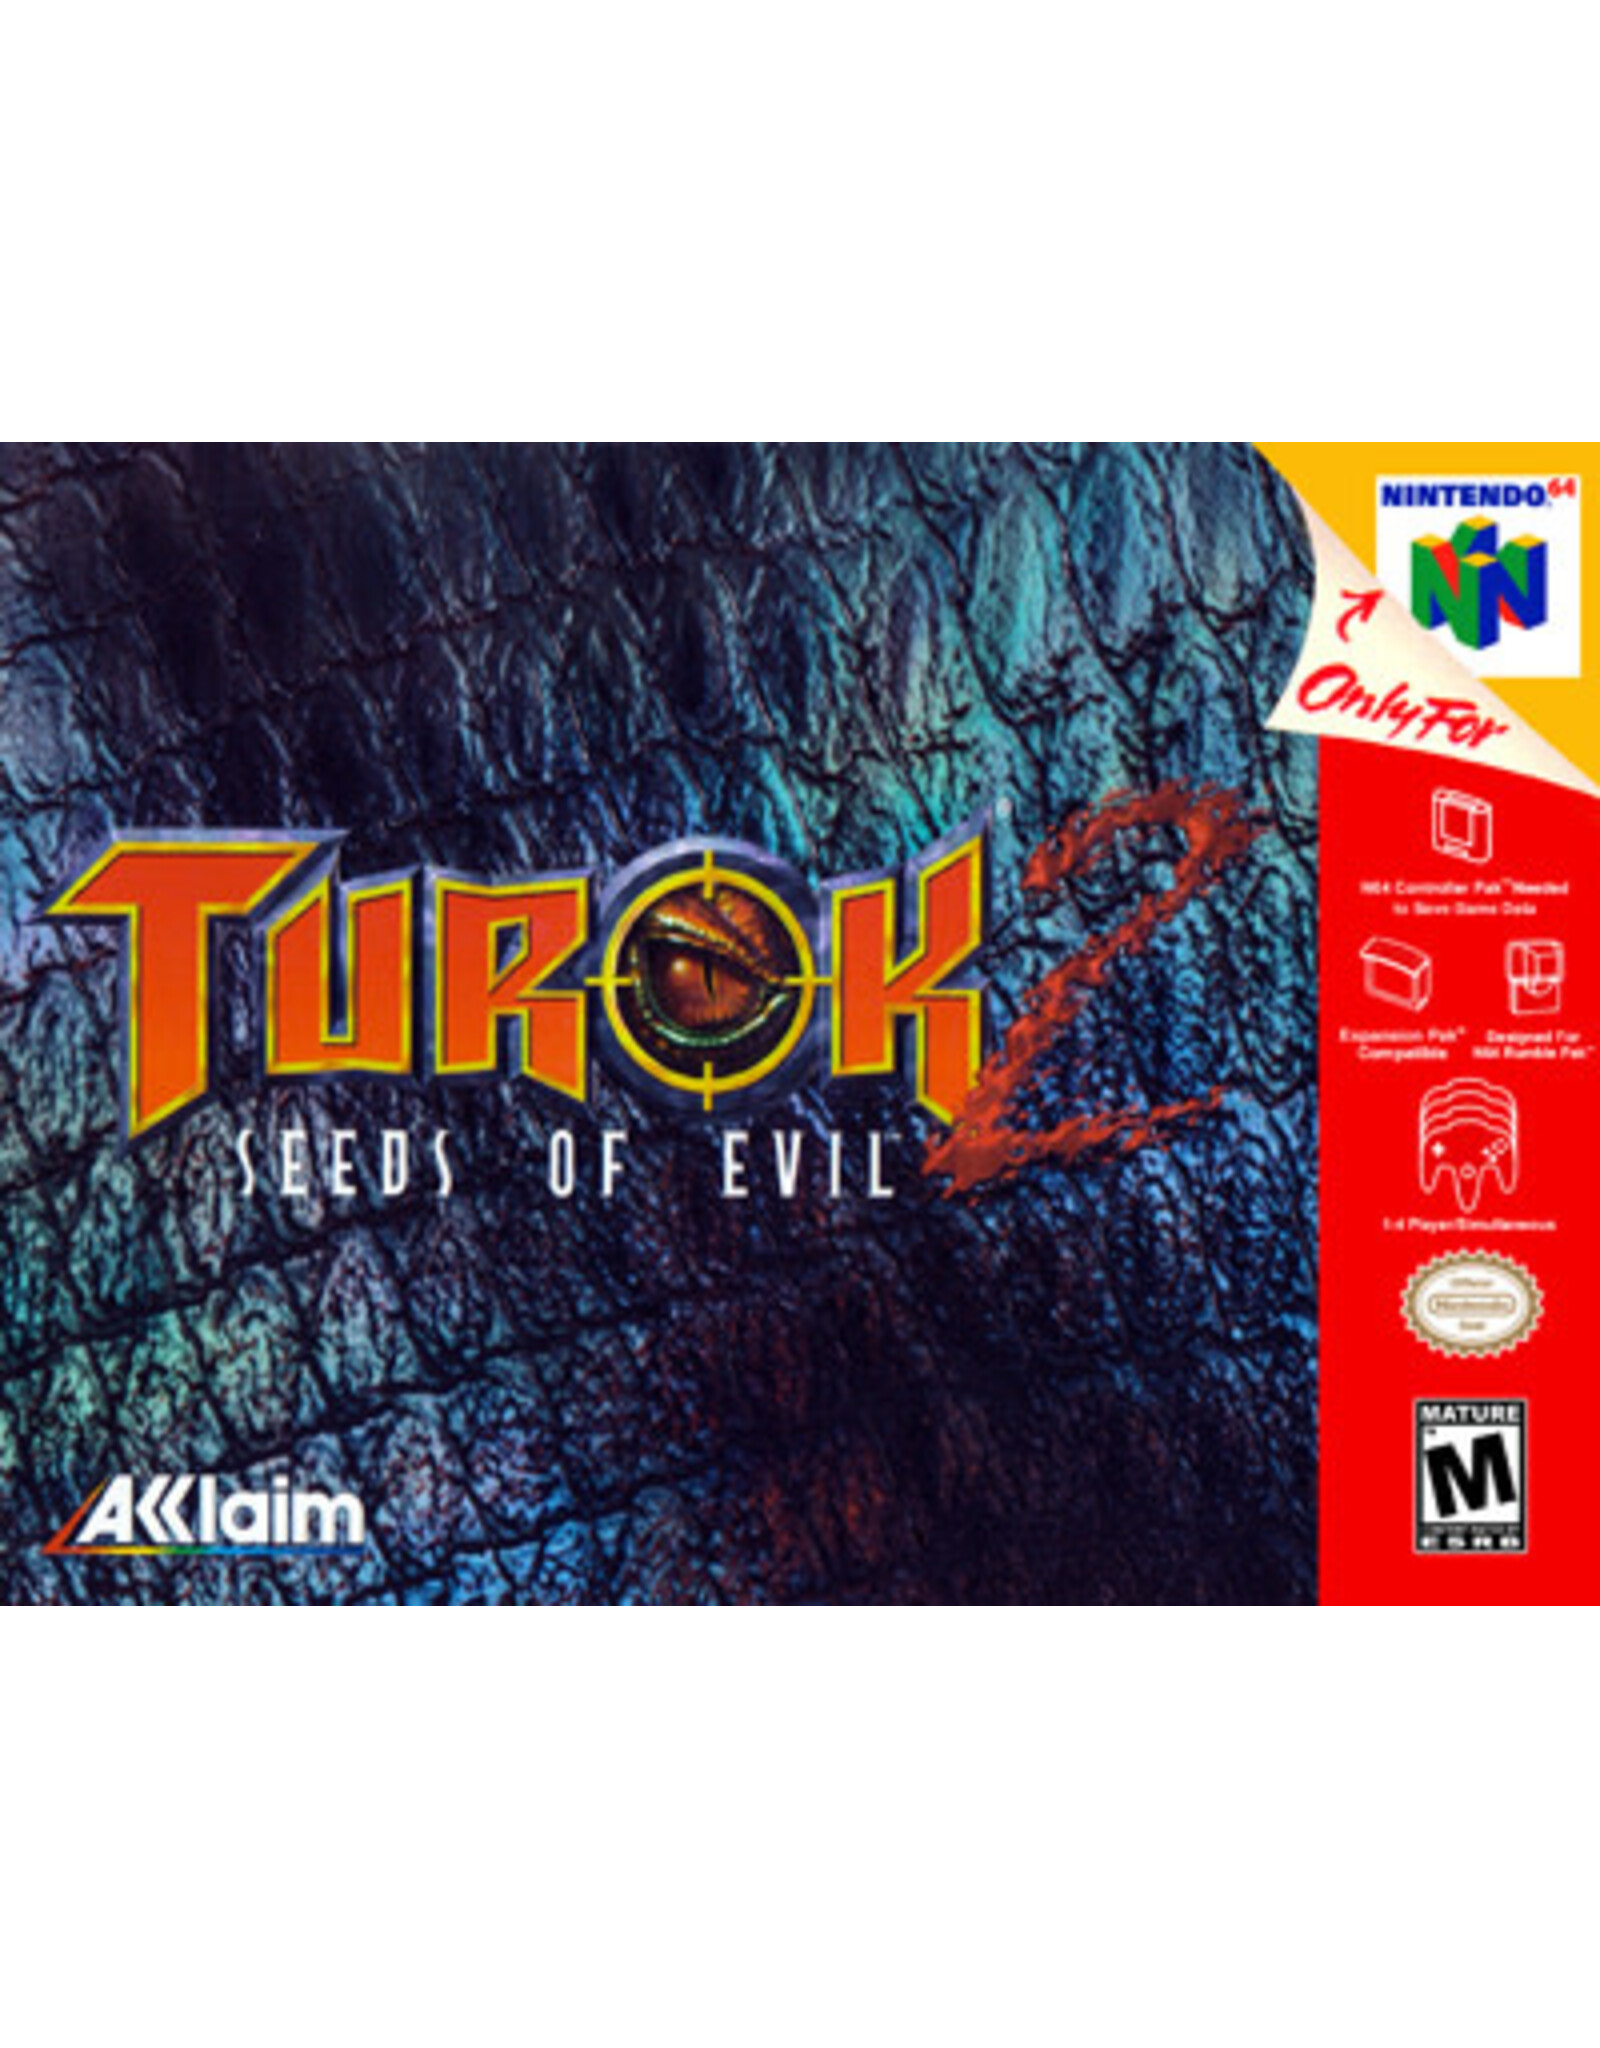 Nintendo 64 Turok 2 Seeds of Evil (Boxed, No Manual)